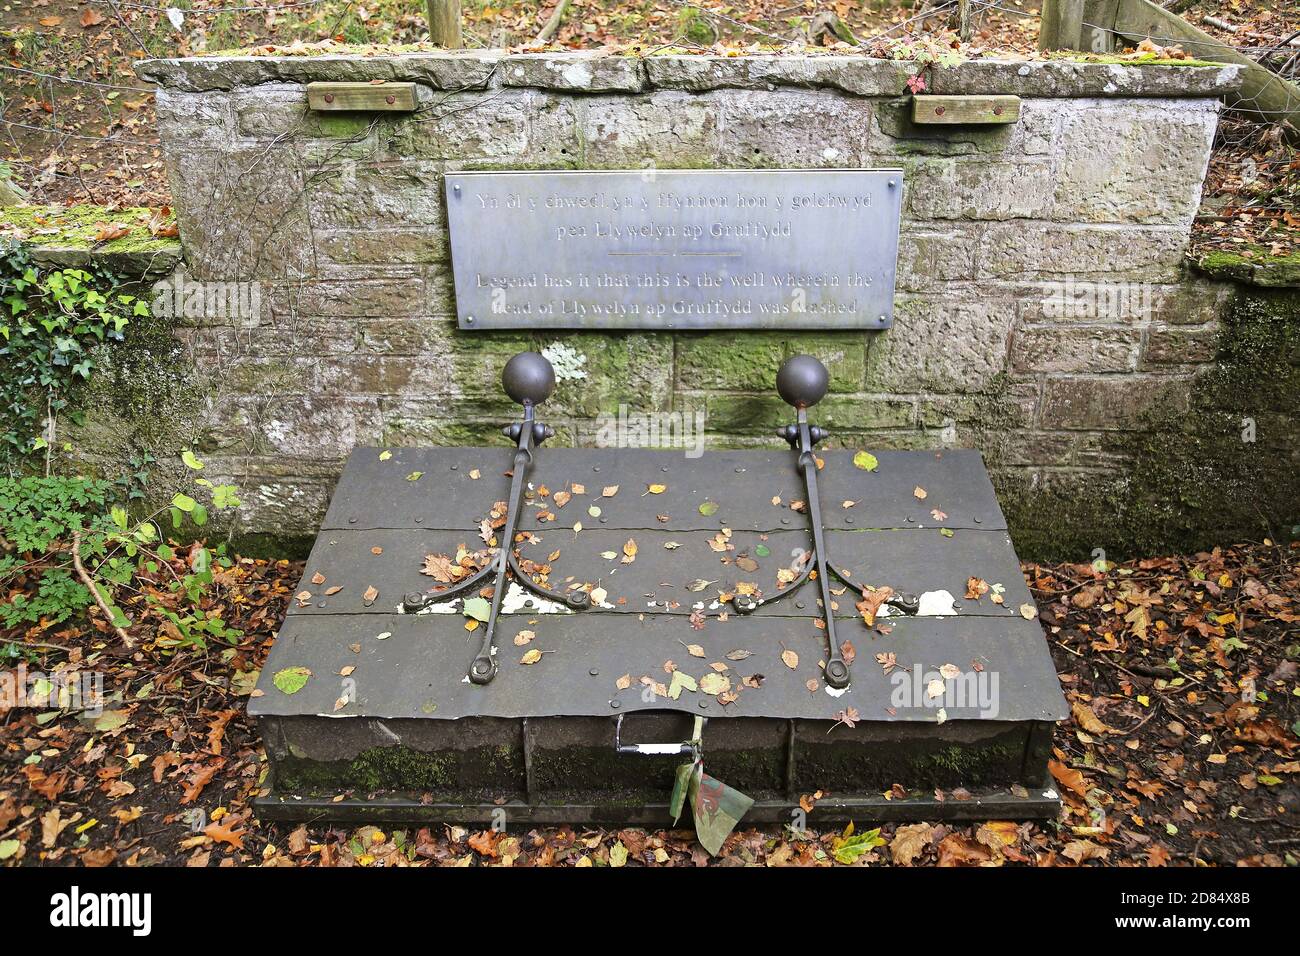 Memorial Well to death of Llywelyn ap Gruffydd (1282), Cilmeri, Builth Wells, Brecknockshire, Powys, Wales, Great Britain, United Kingdom, UK, Europe Stock Photo